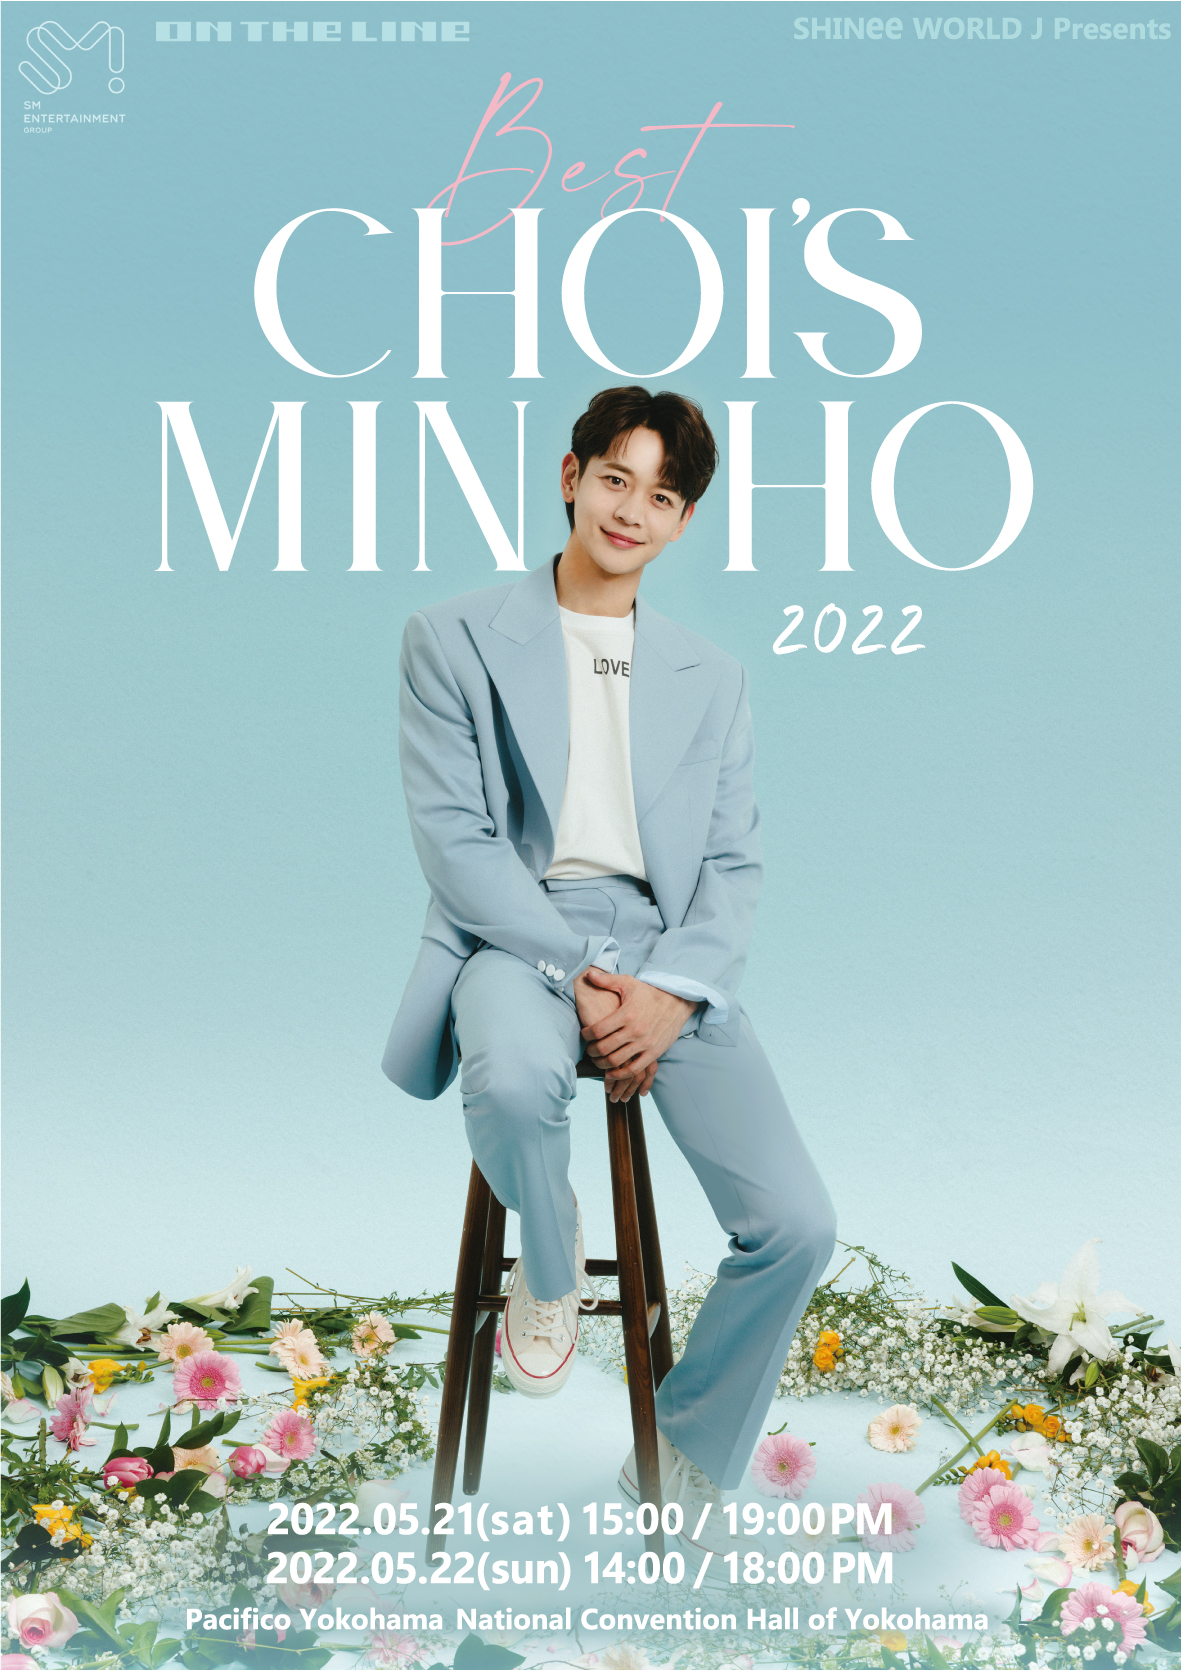 SHINee WORLD J Presents “BEST CHOI's MINHO” 2022 - ON THE LINE